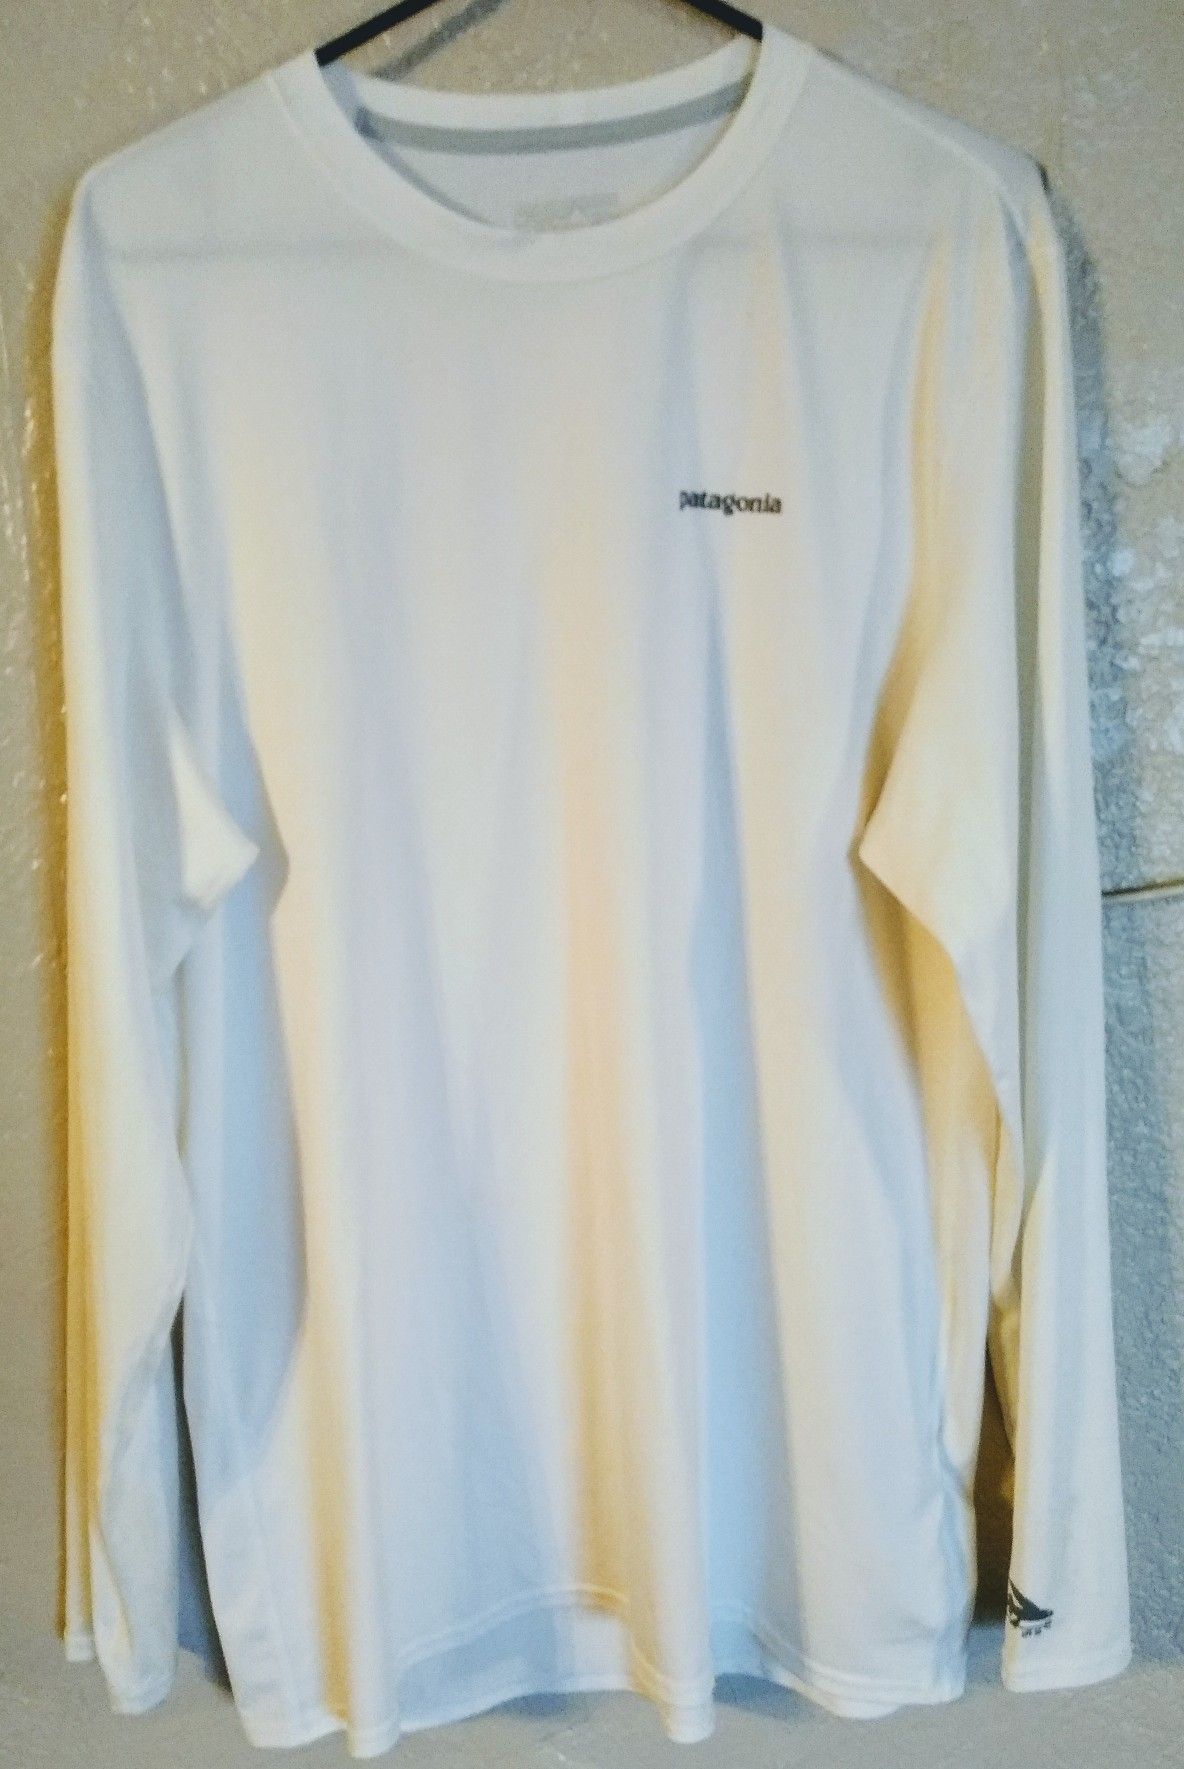 Patagonia long sleeve shirt